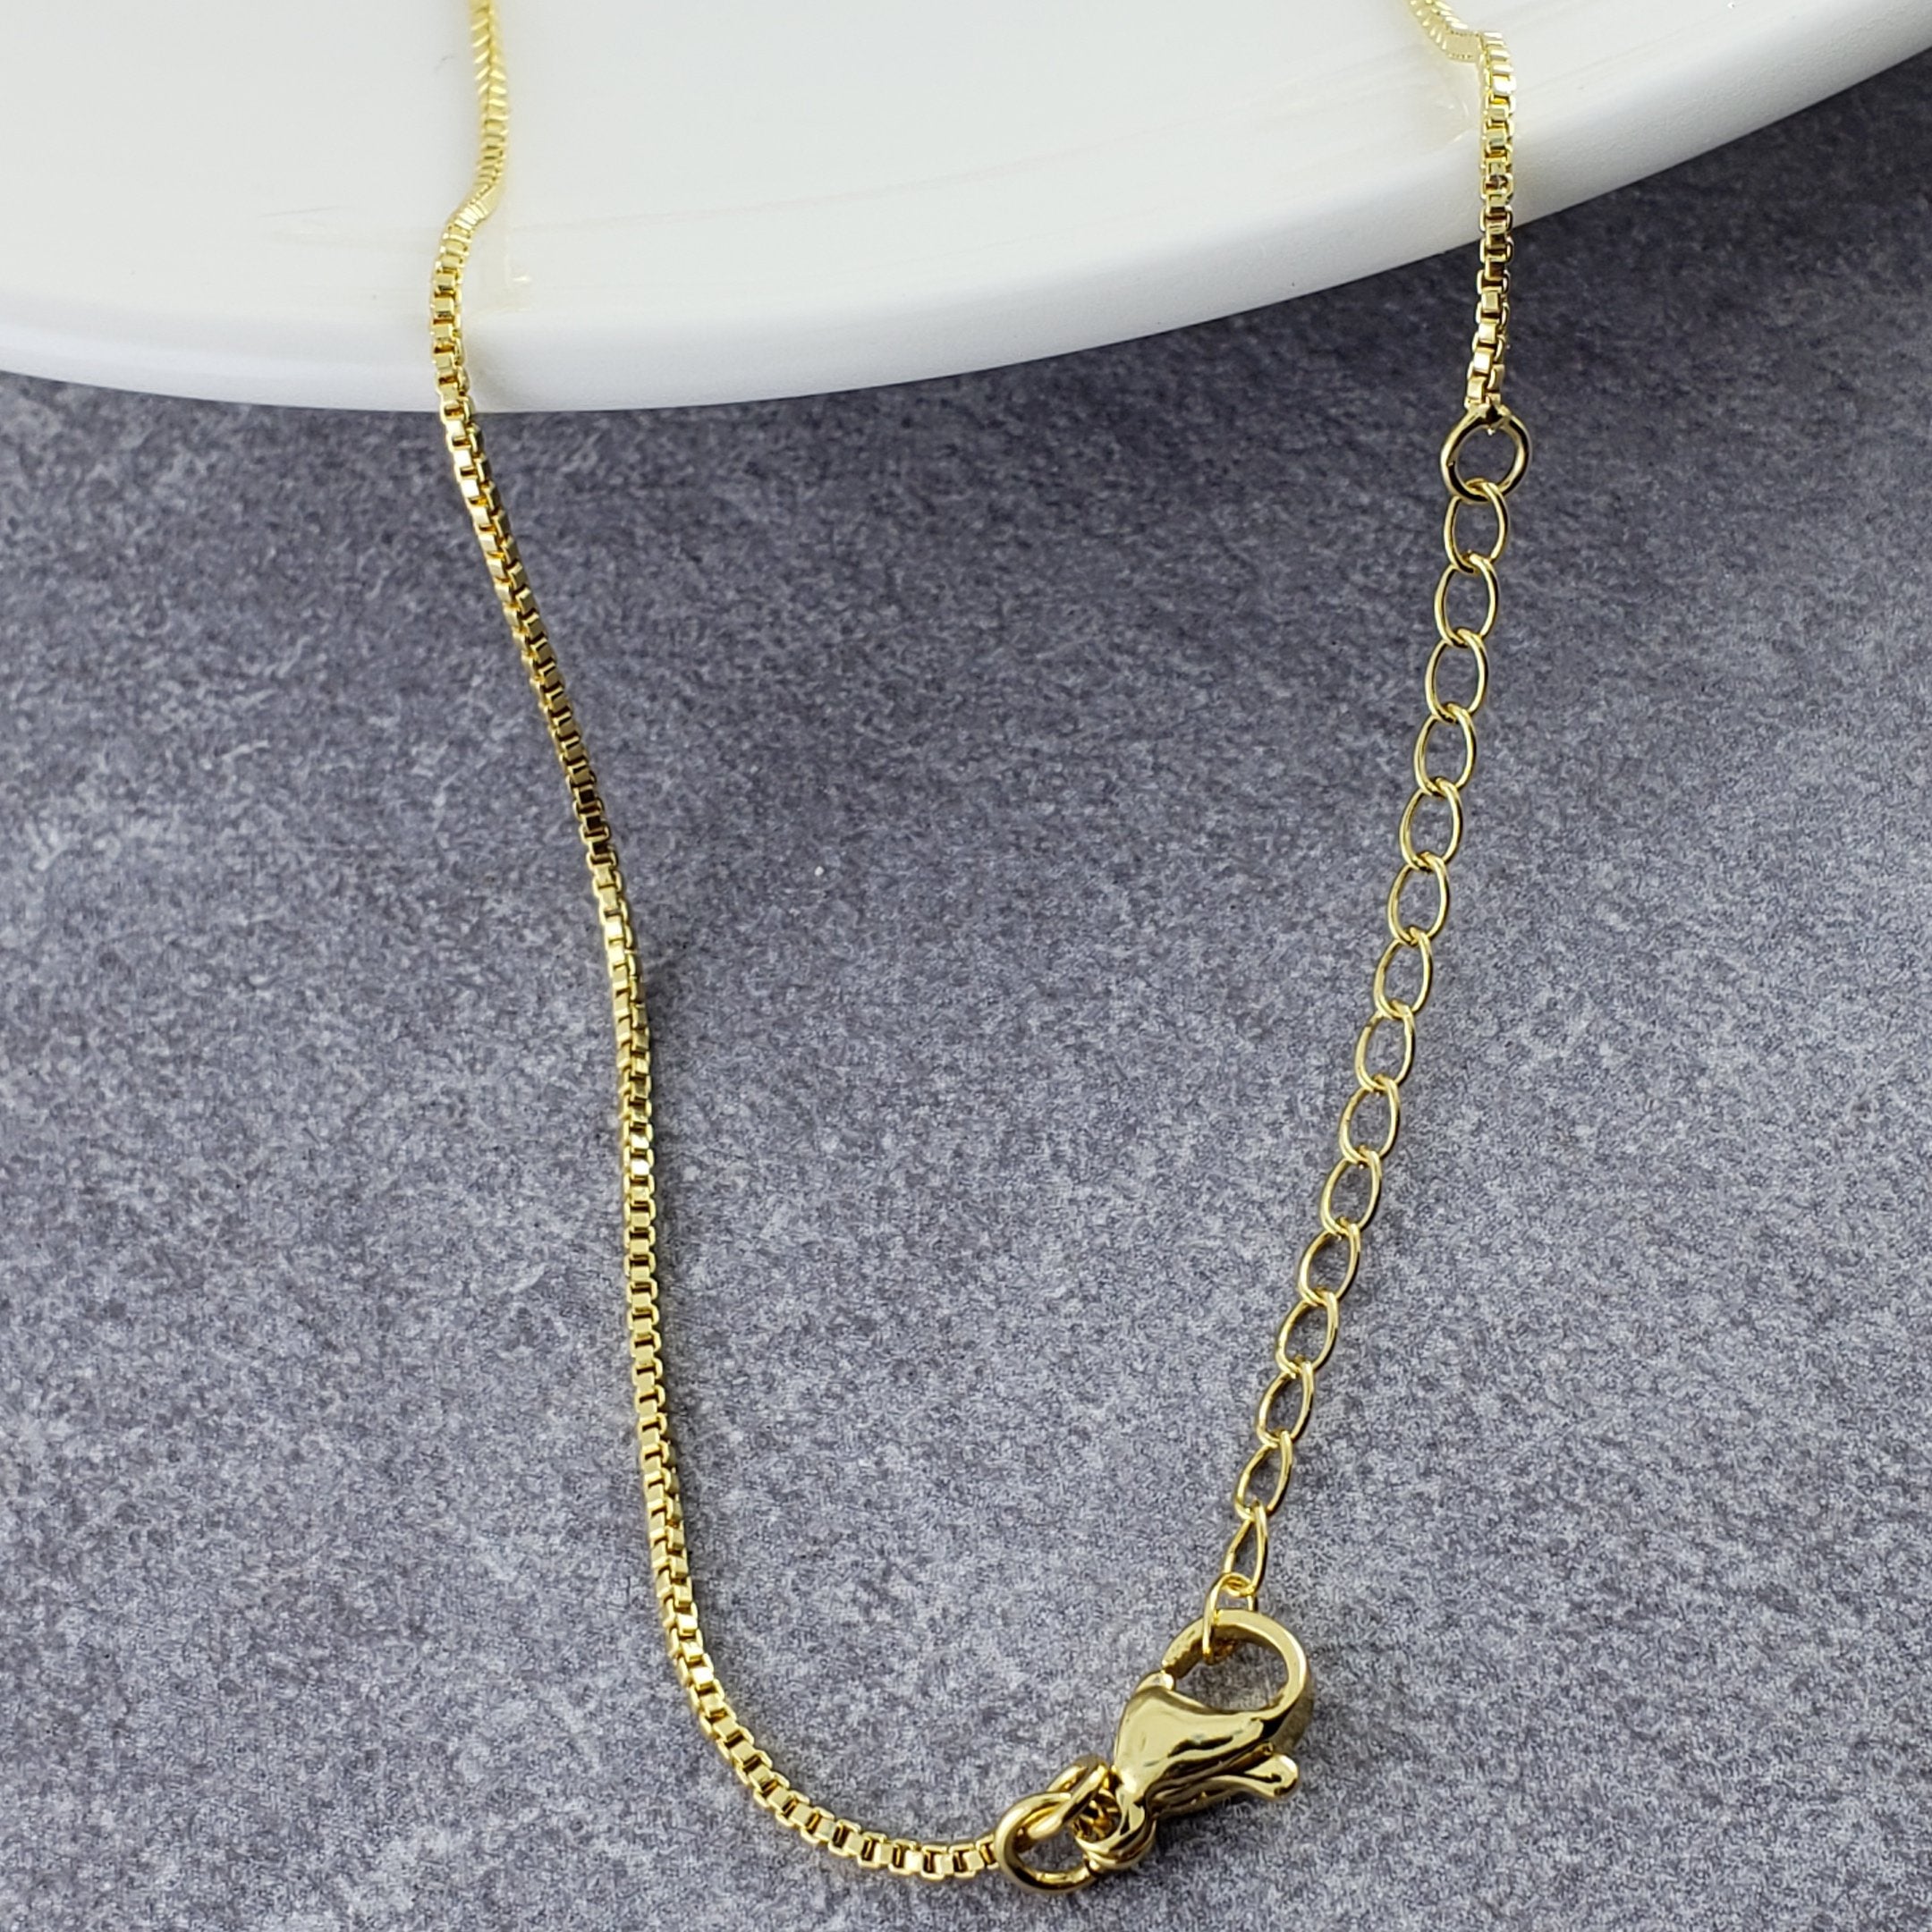 Evil Eye Eyelash Gold Blue Copper Necklace Pendant Chain For Women